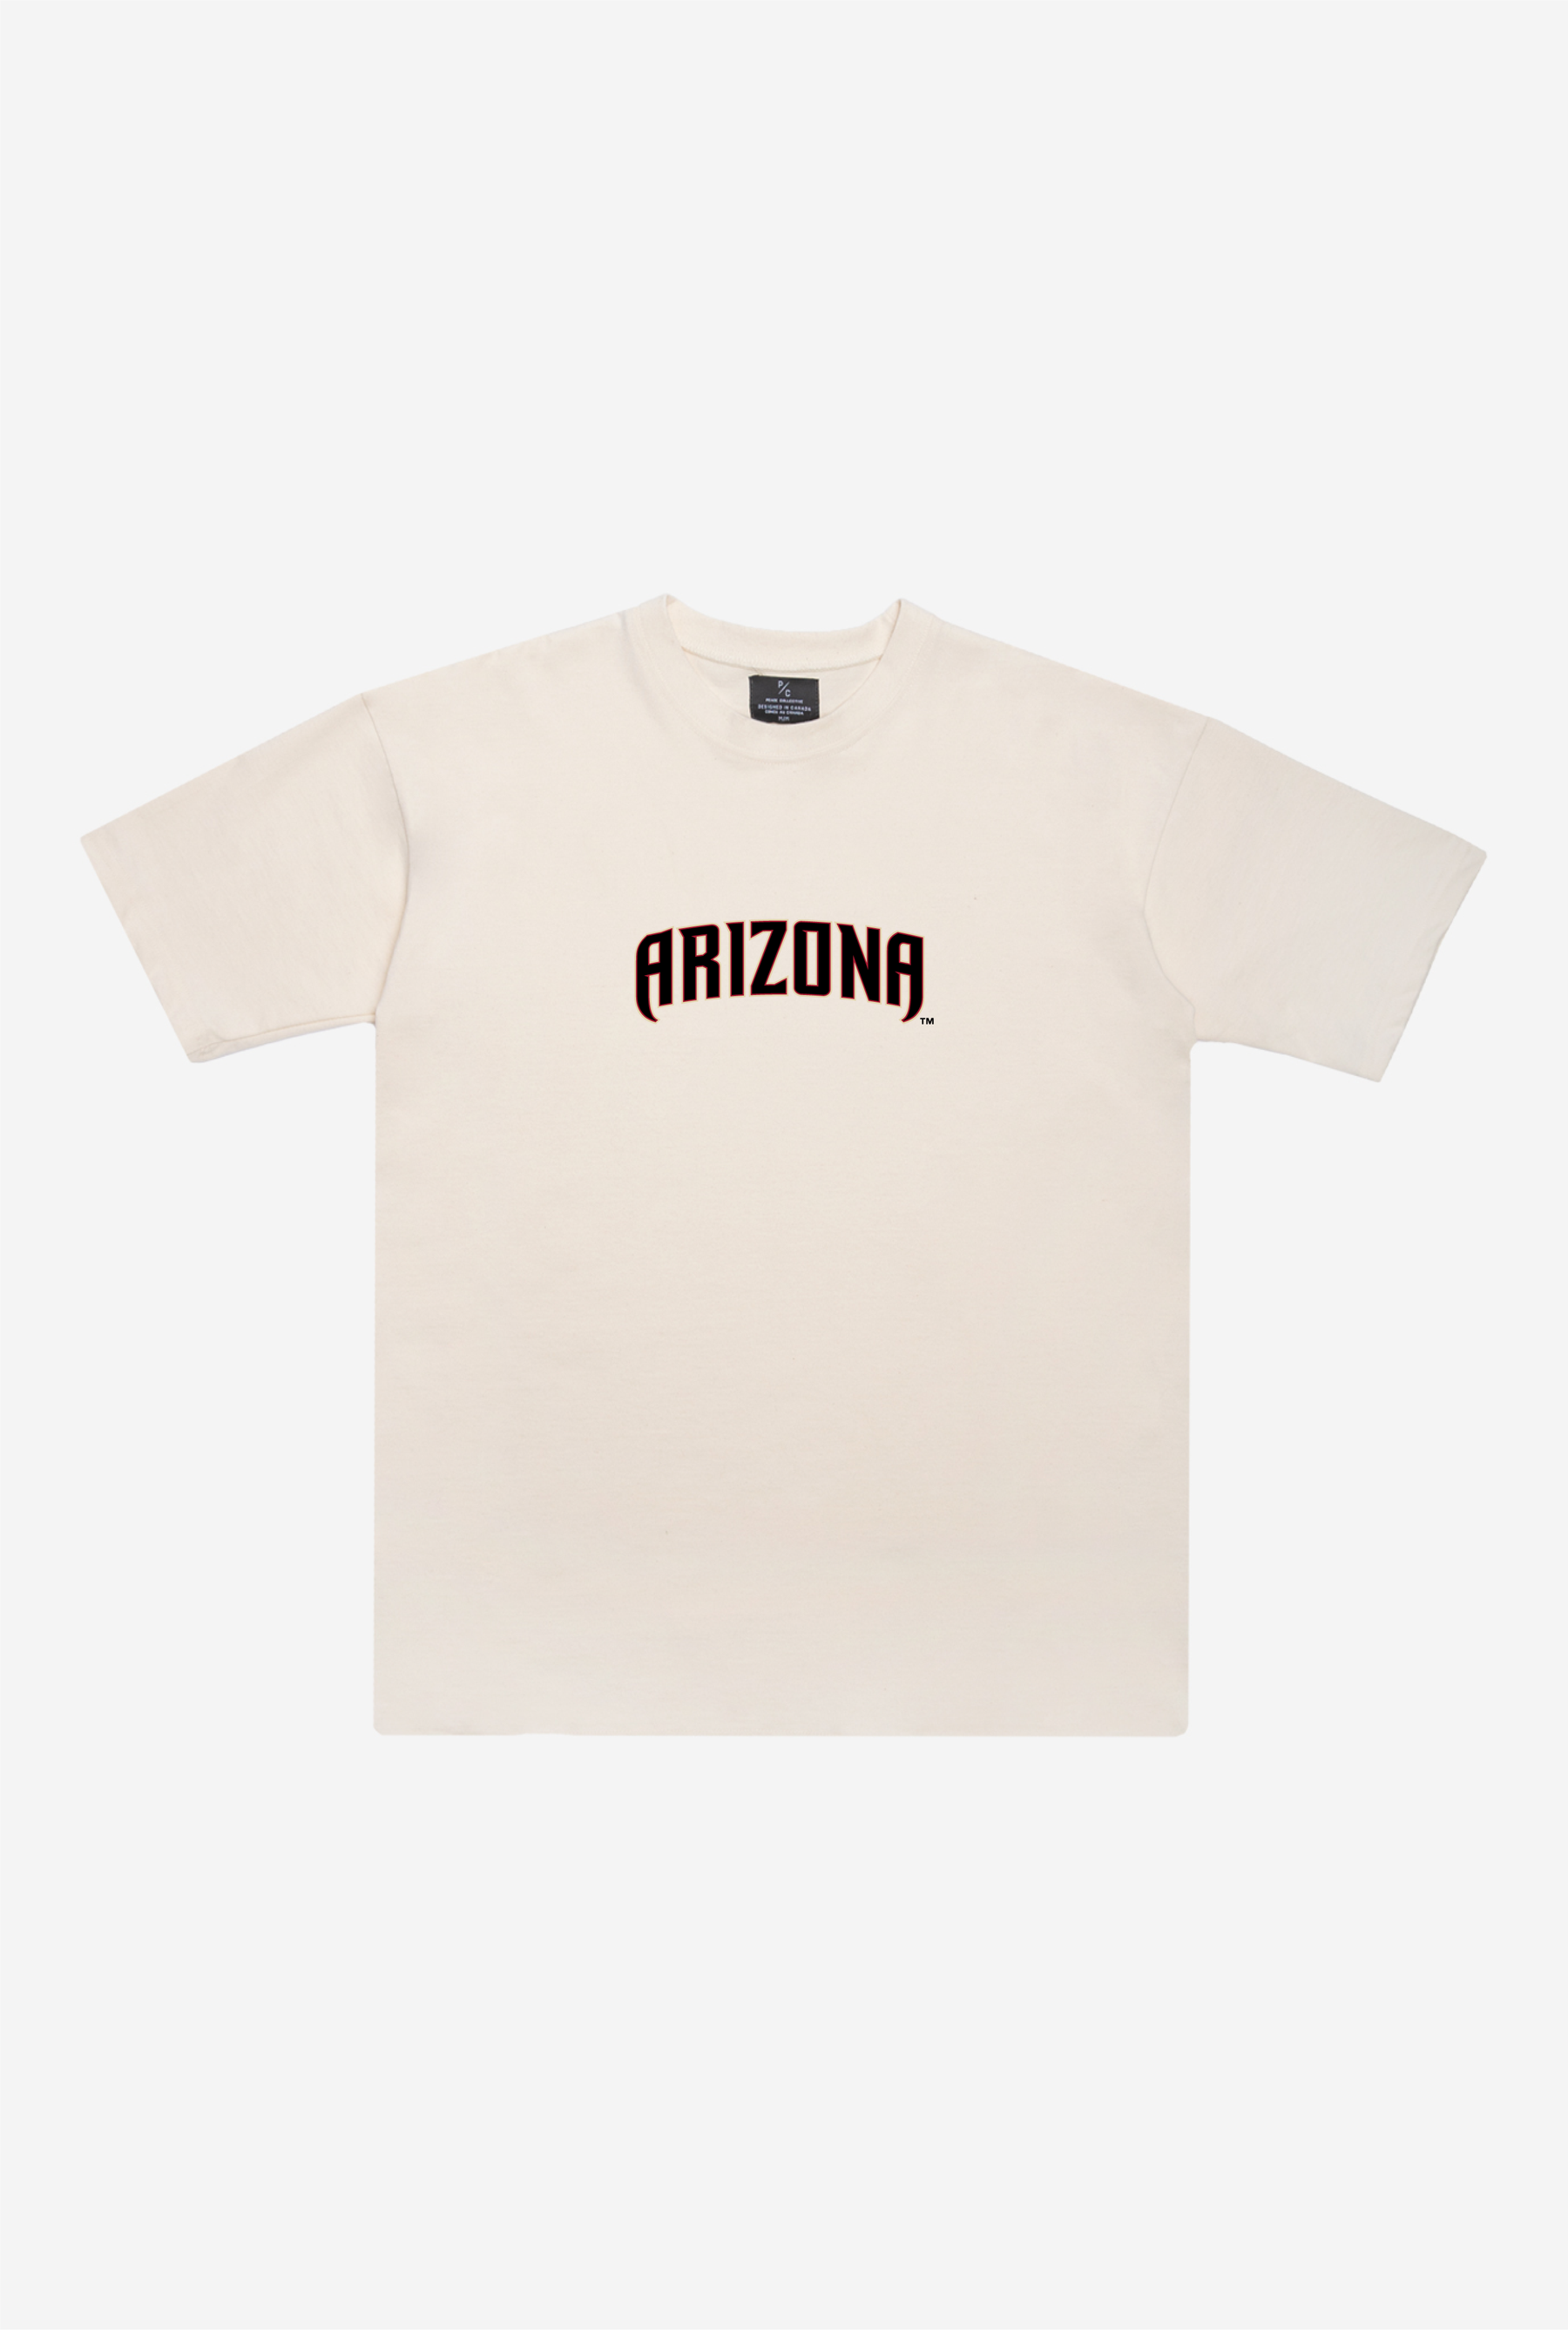 Arizona DiamondBacks Heavyweight T-Shirt - Natural